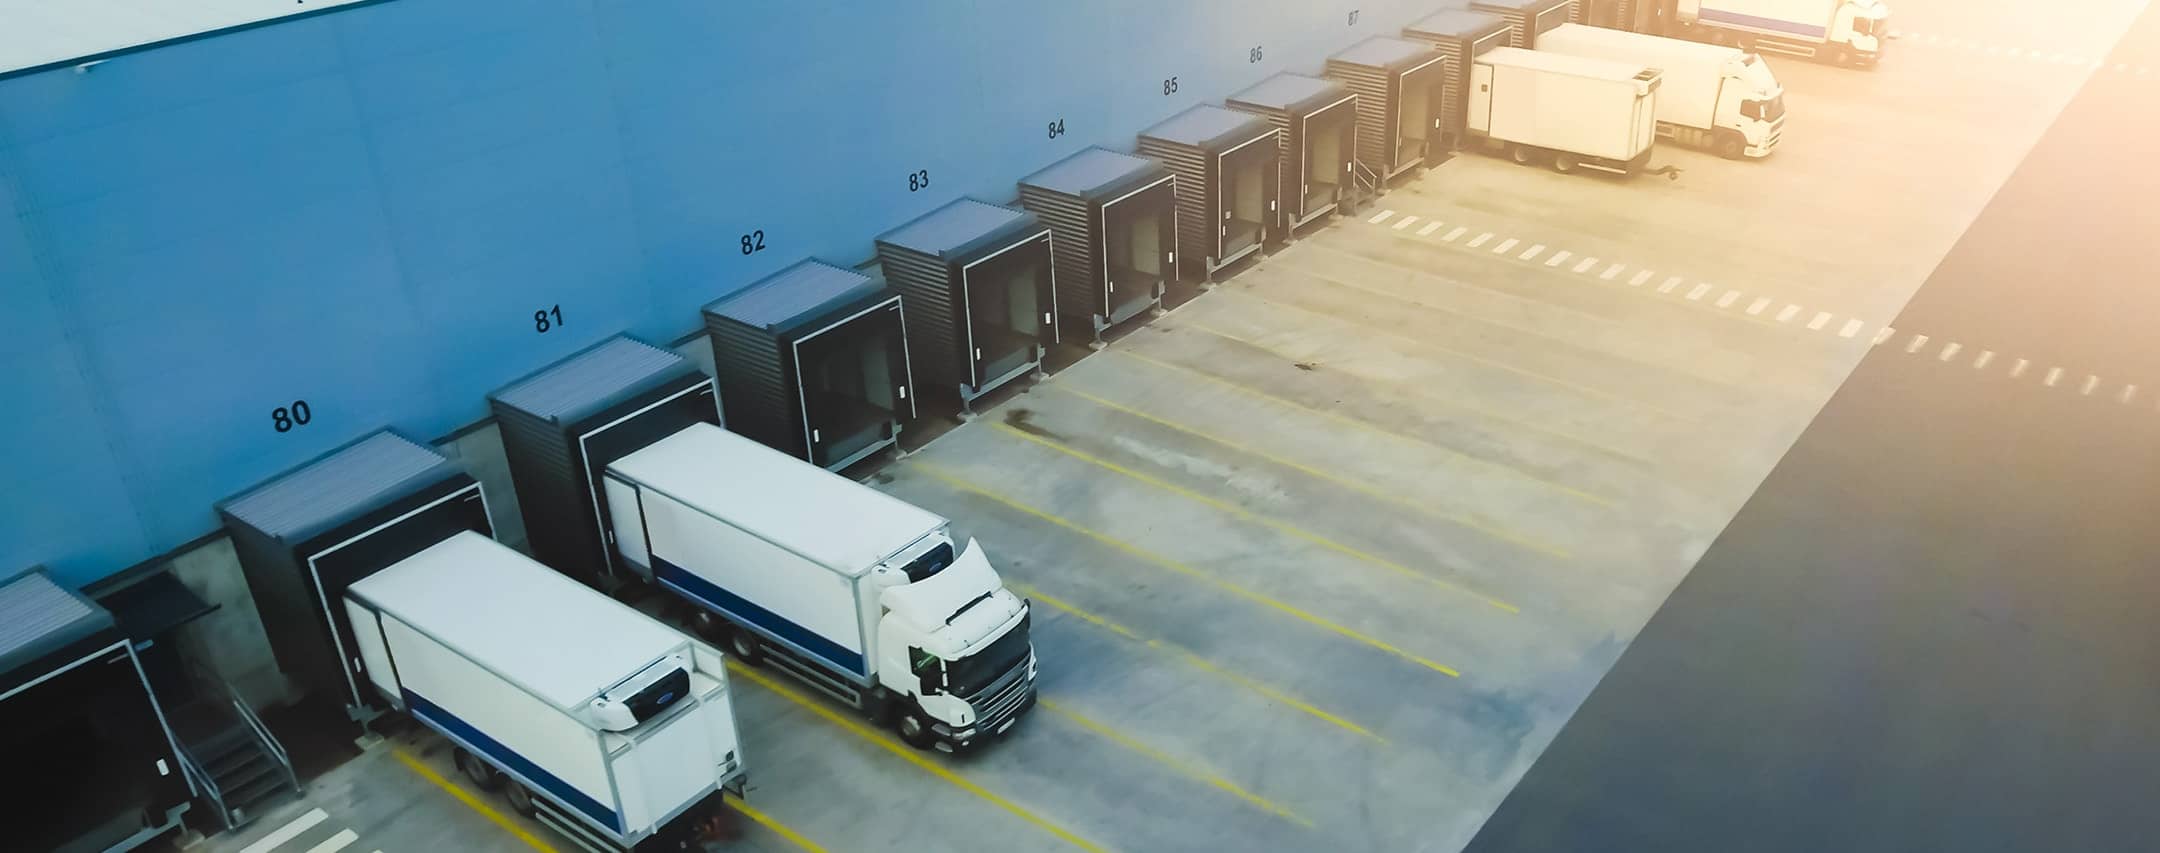 Logistics Center Trucks